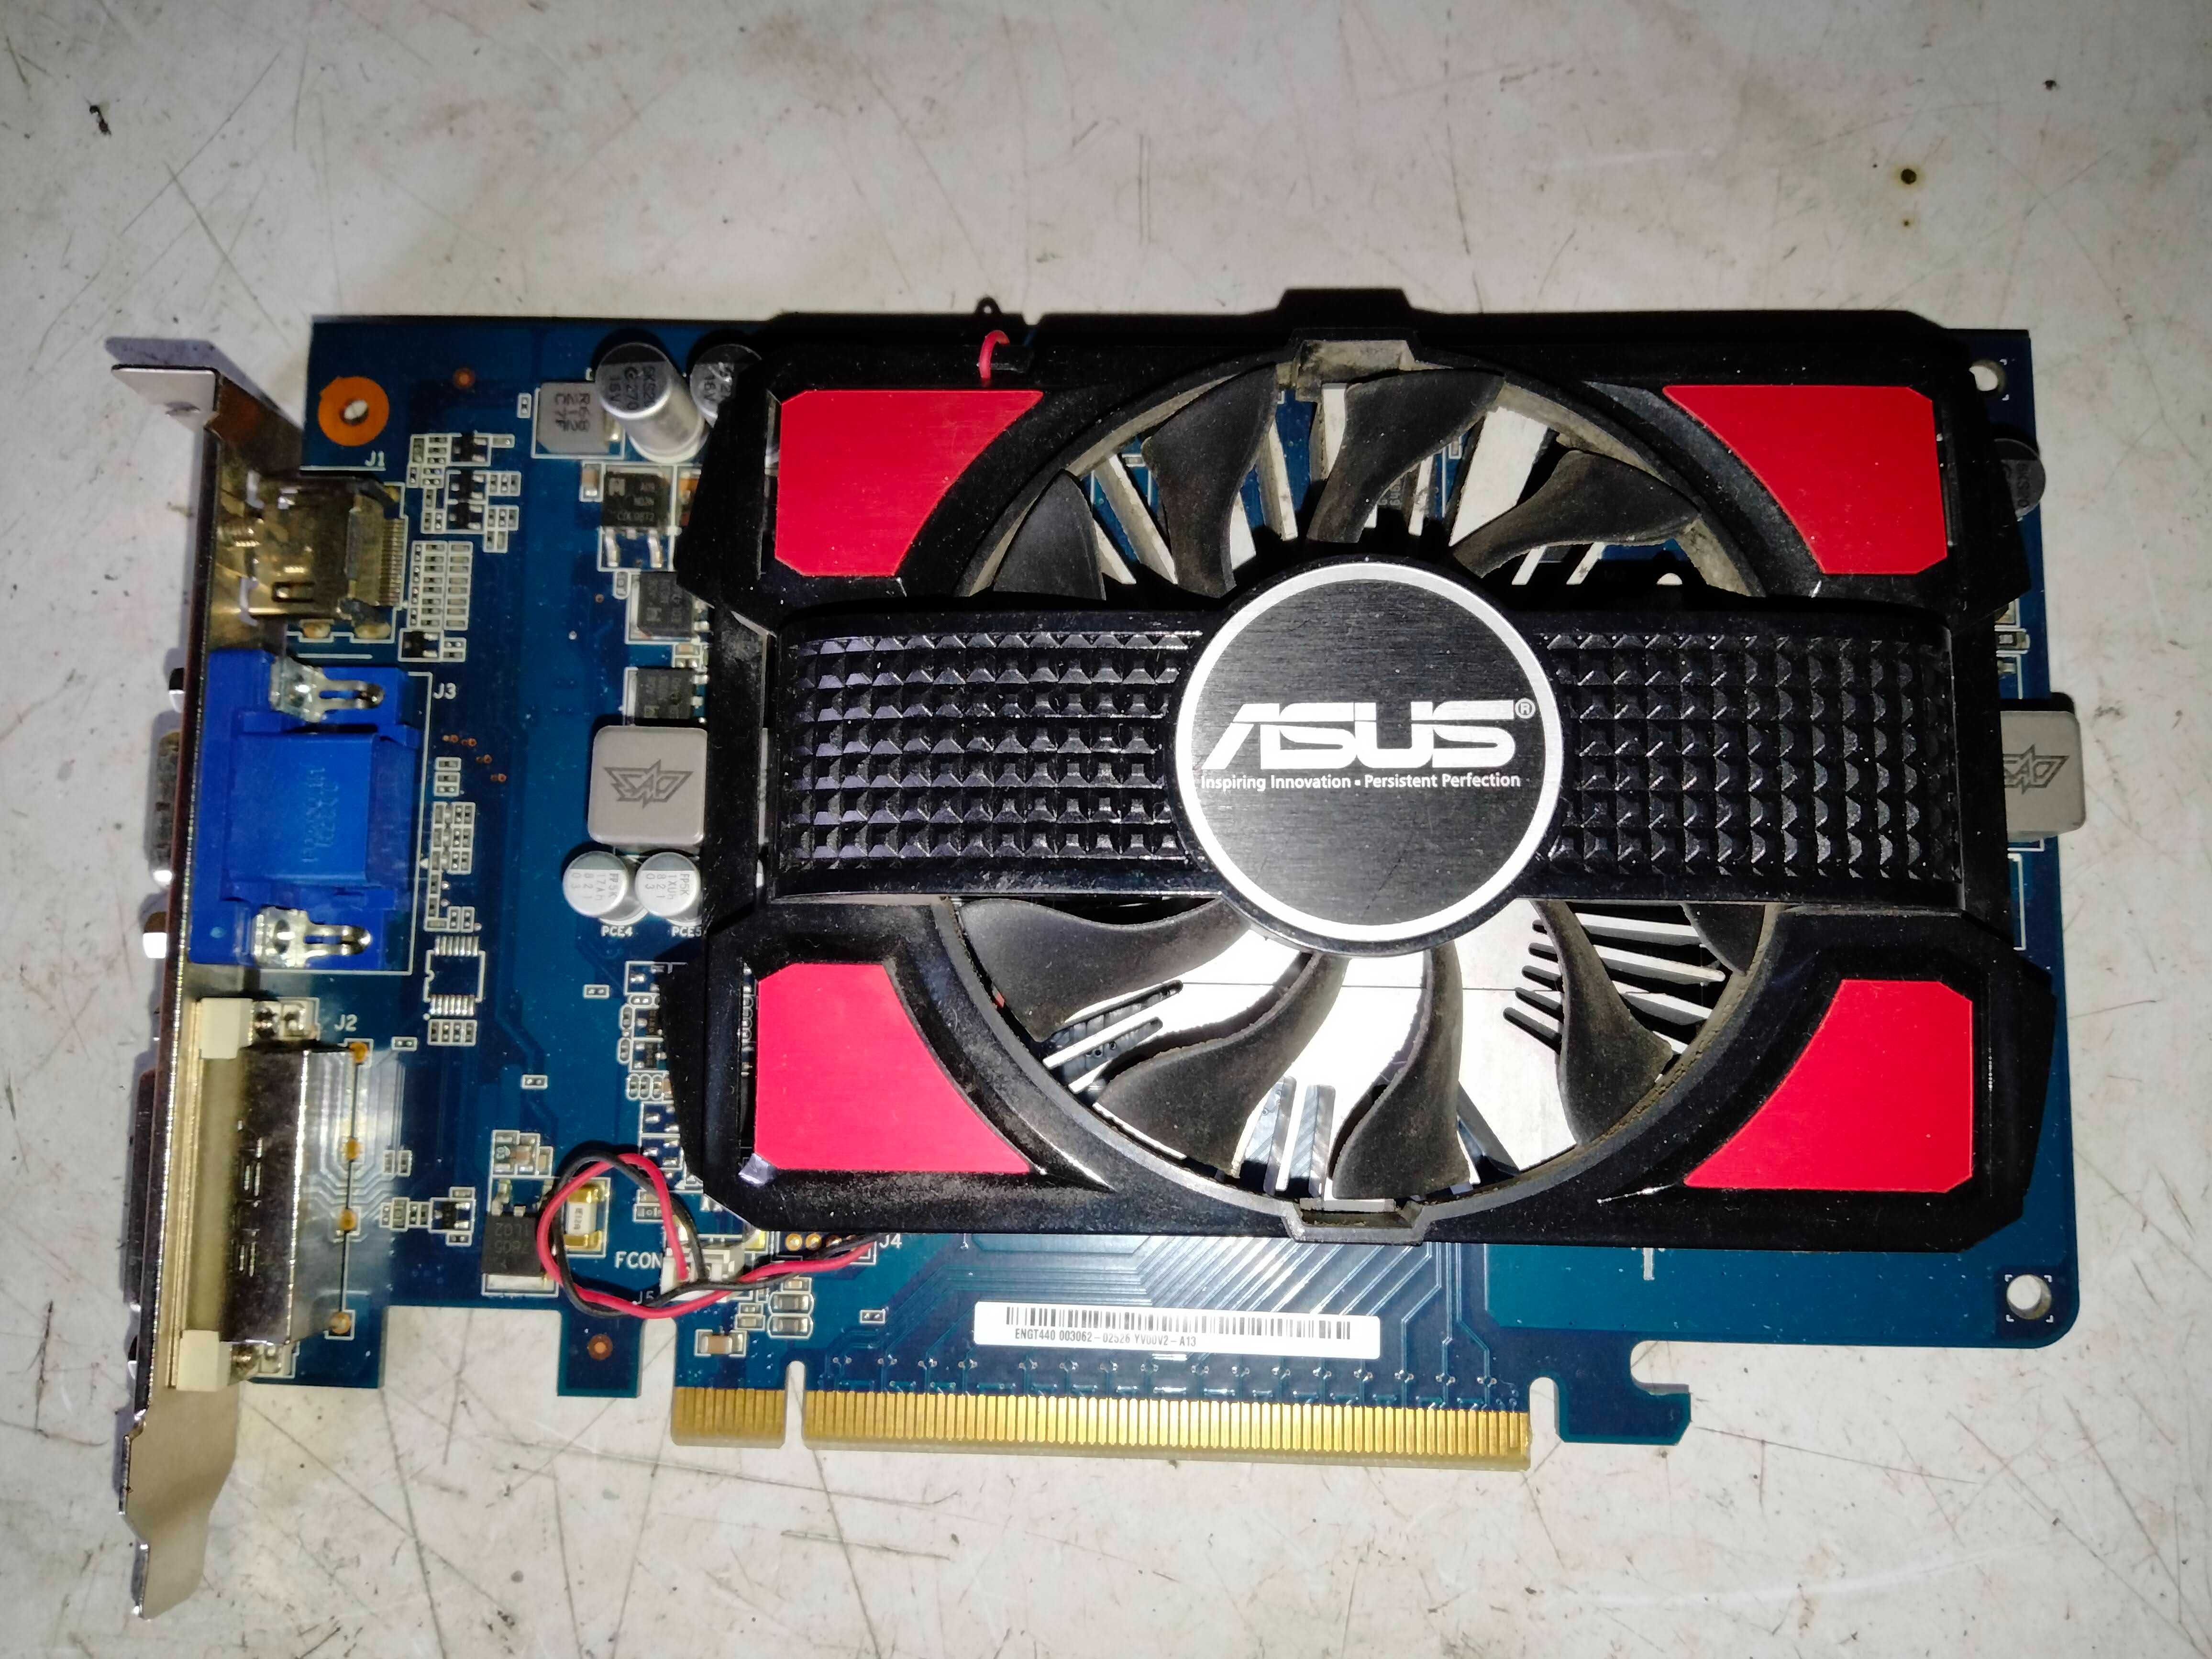 Видеокарта Asus GT 440 Radeon HD 6570